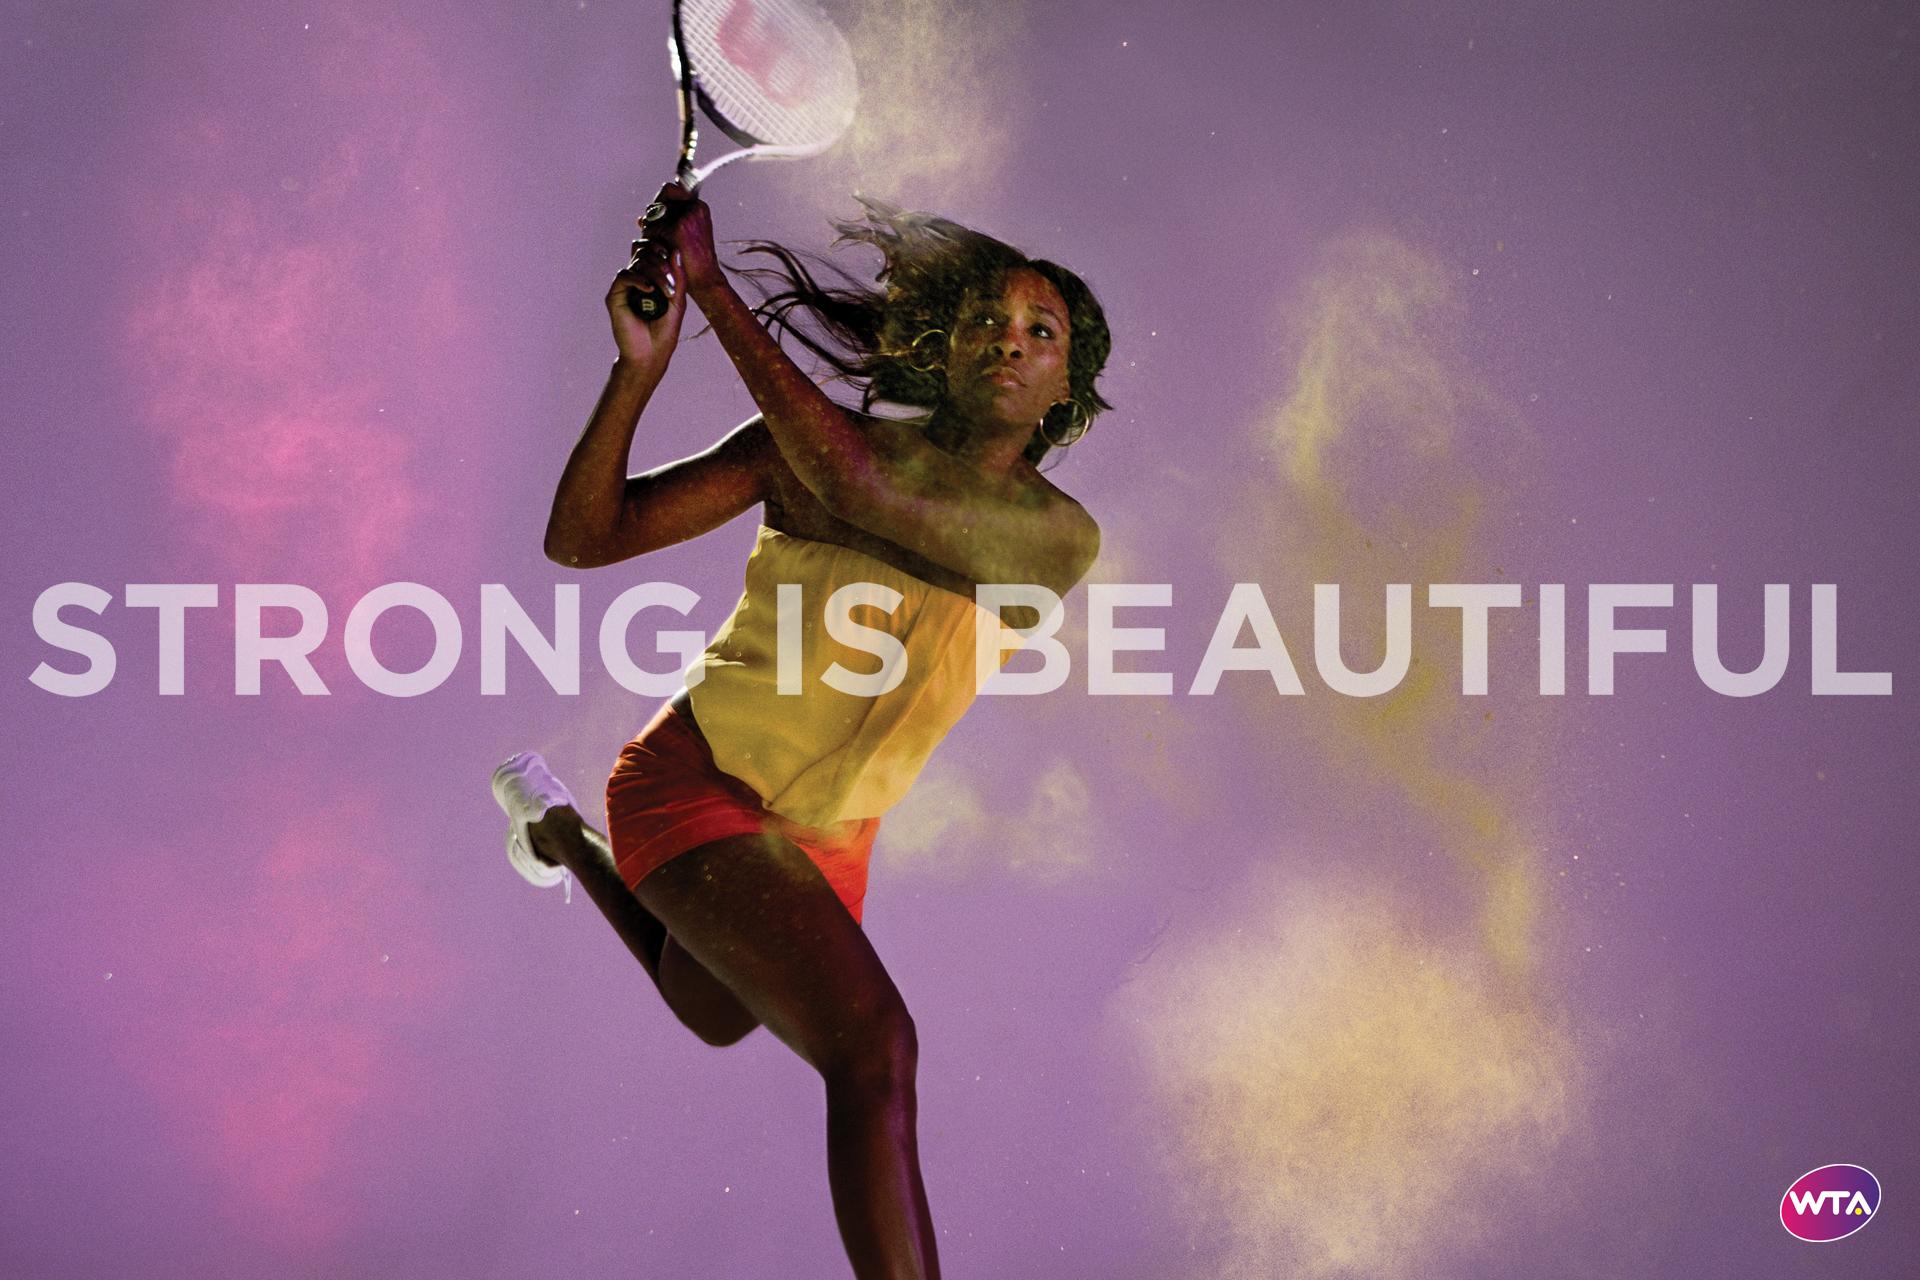 Venus Williams in Strong Is Beautiful - WTA Photo (30743670) - Fanpop1920 x 1280